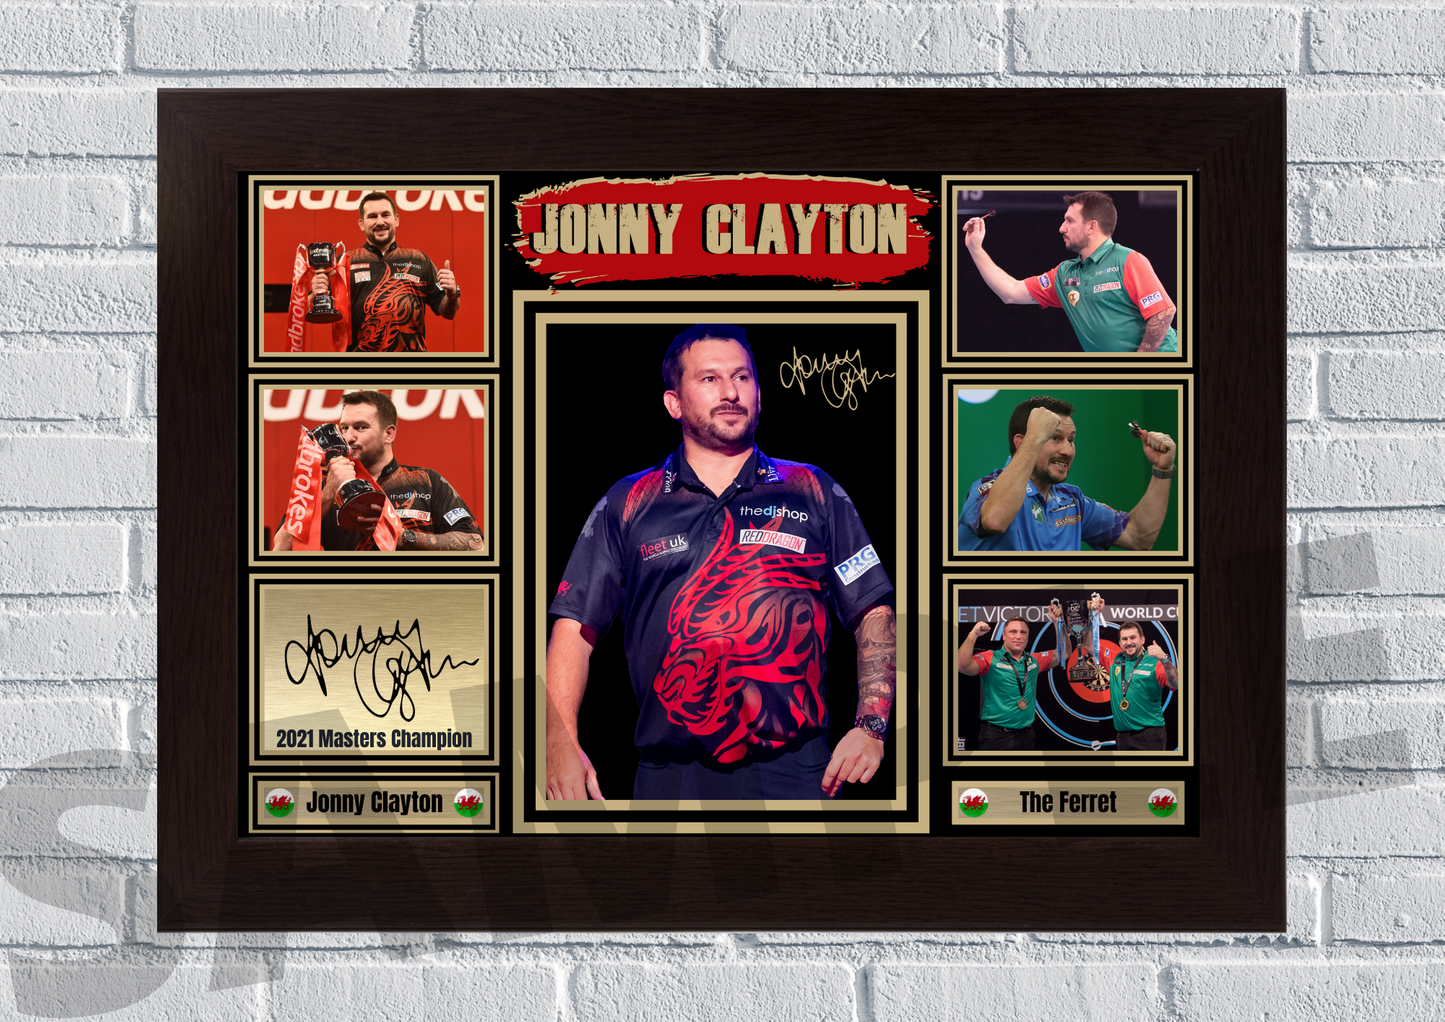 Jonny Clayton (Darts) #88 - Memorabilia/Collectable Signed print